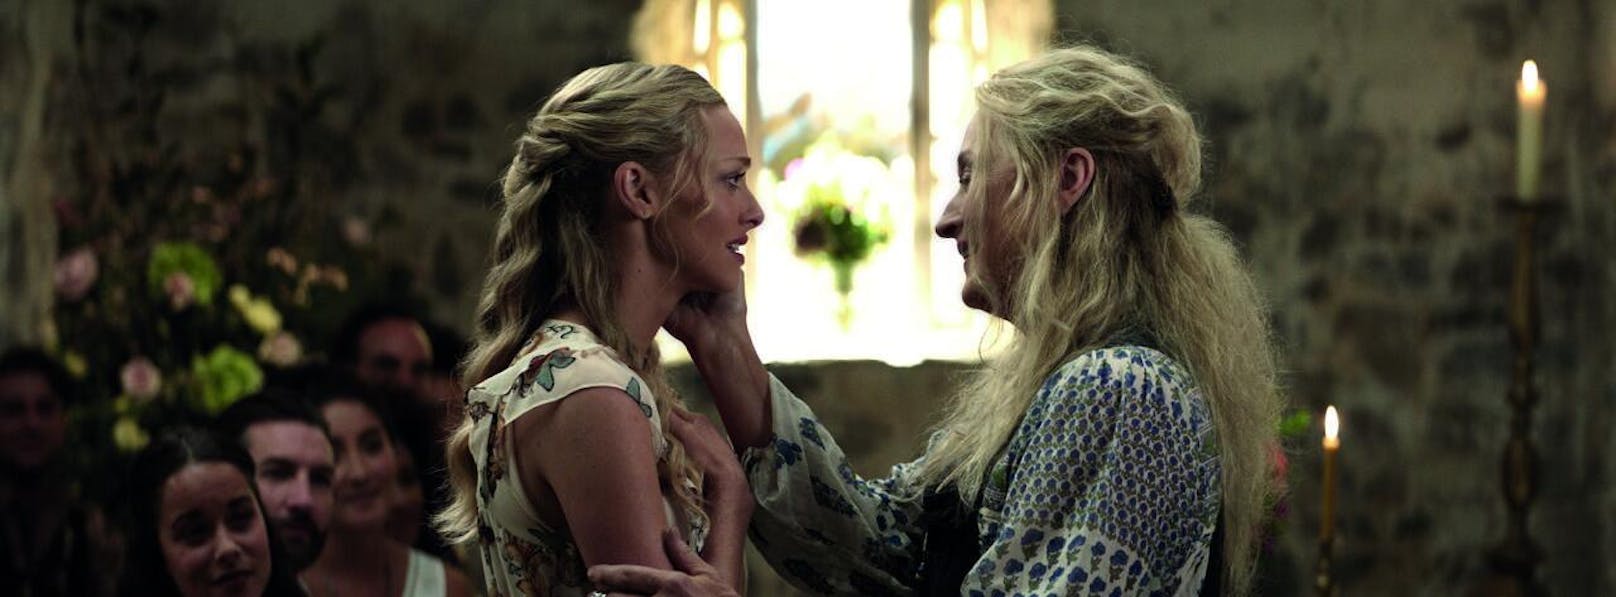 Sophie (Amanda Seyfried) und Donna (Meryl Streep) in "Mamma Mia! Here We Go Again".